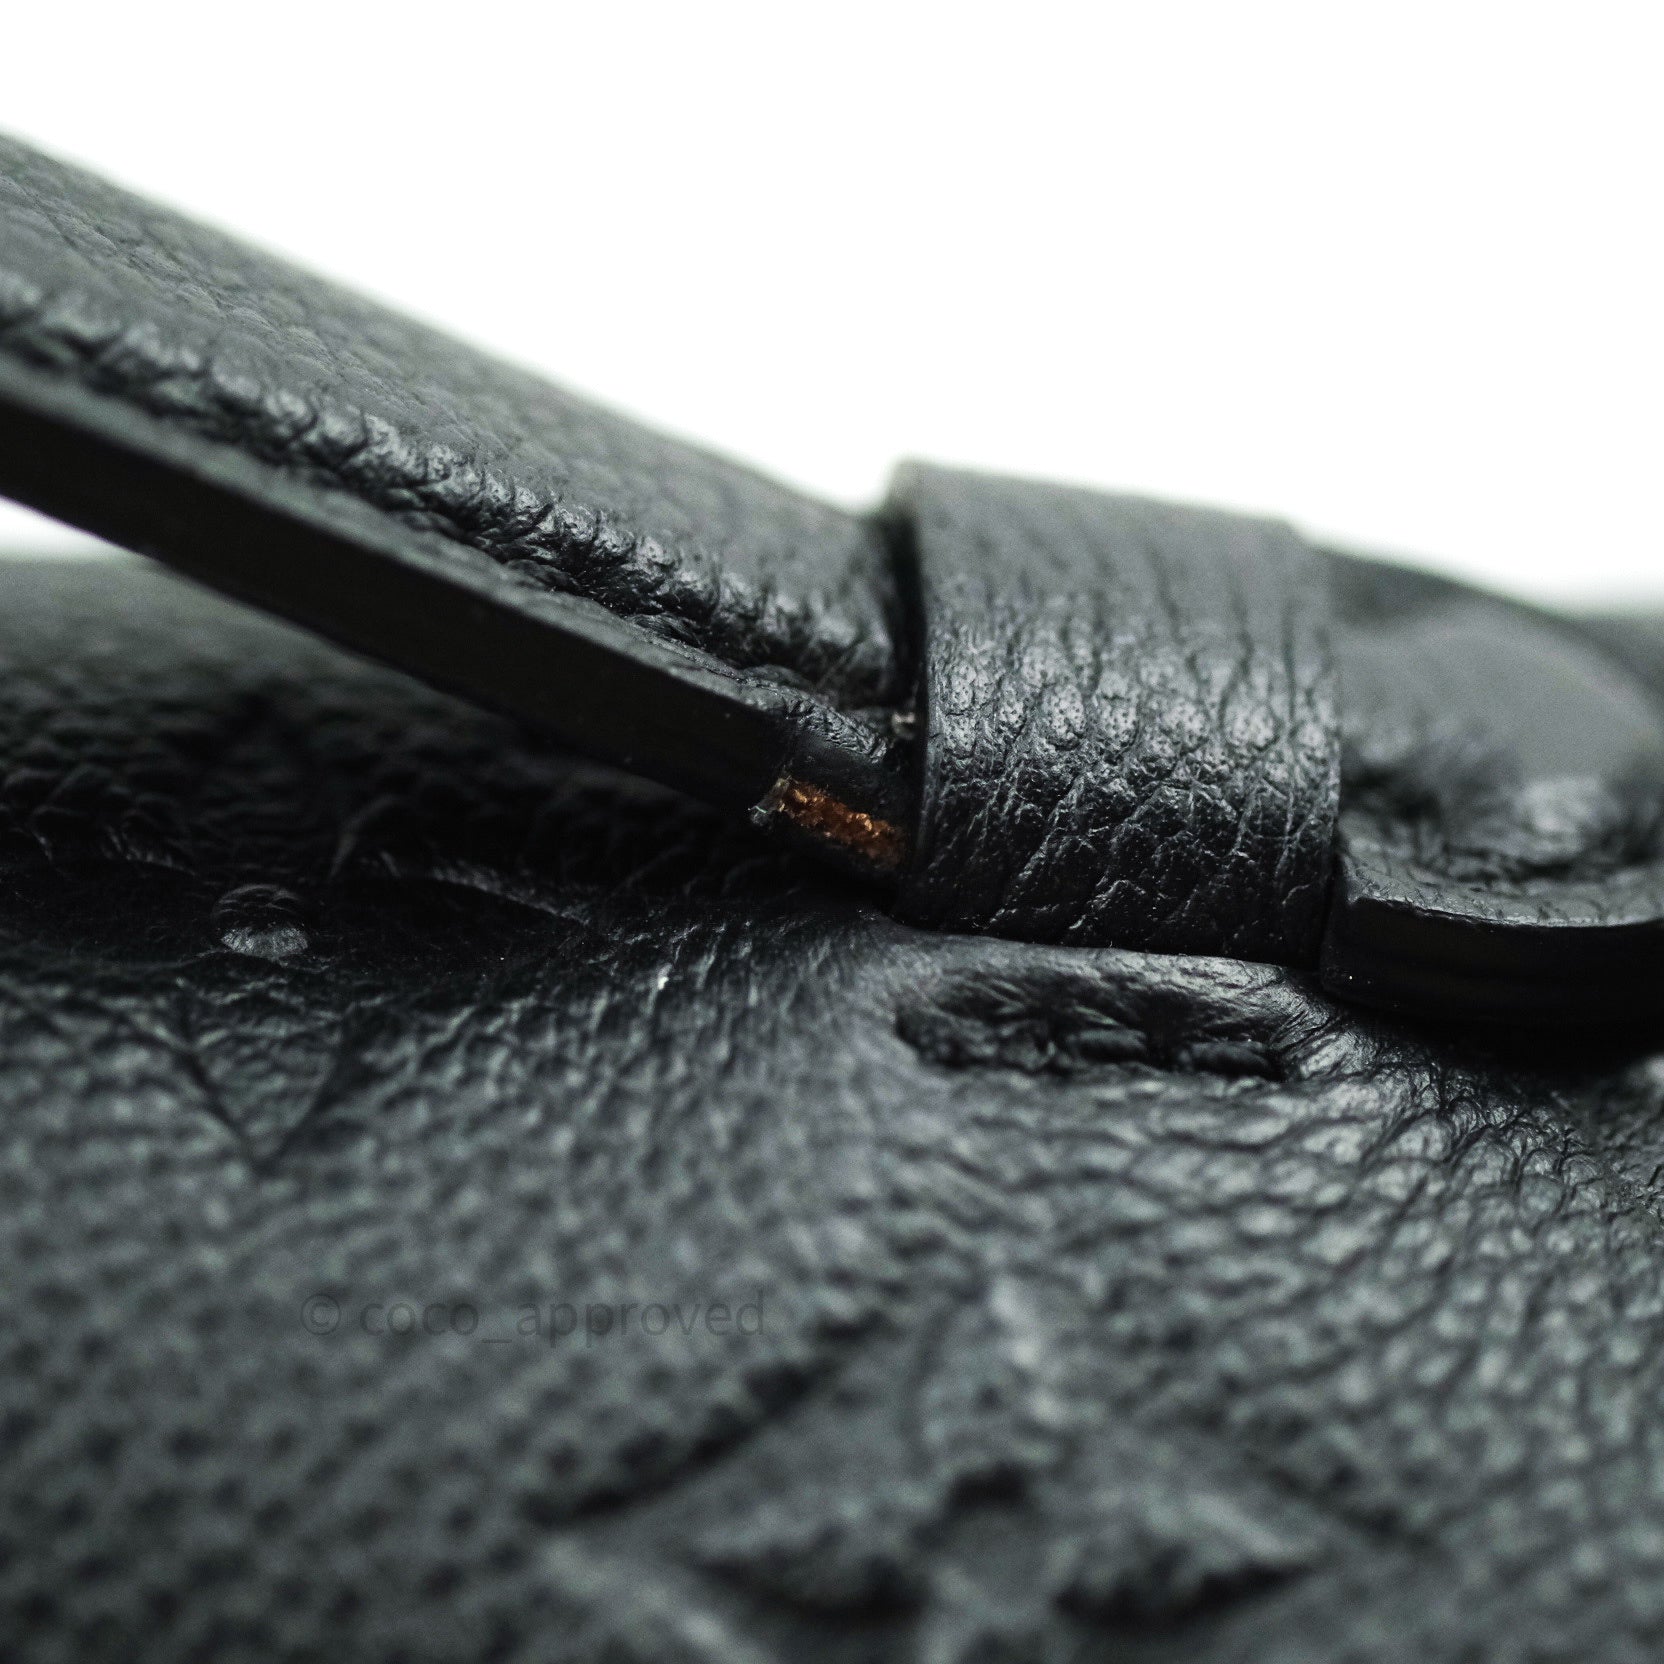 Louis Vuitton Empreinte Pochette Metis Black – Coco Approved Studio